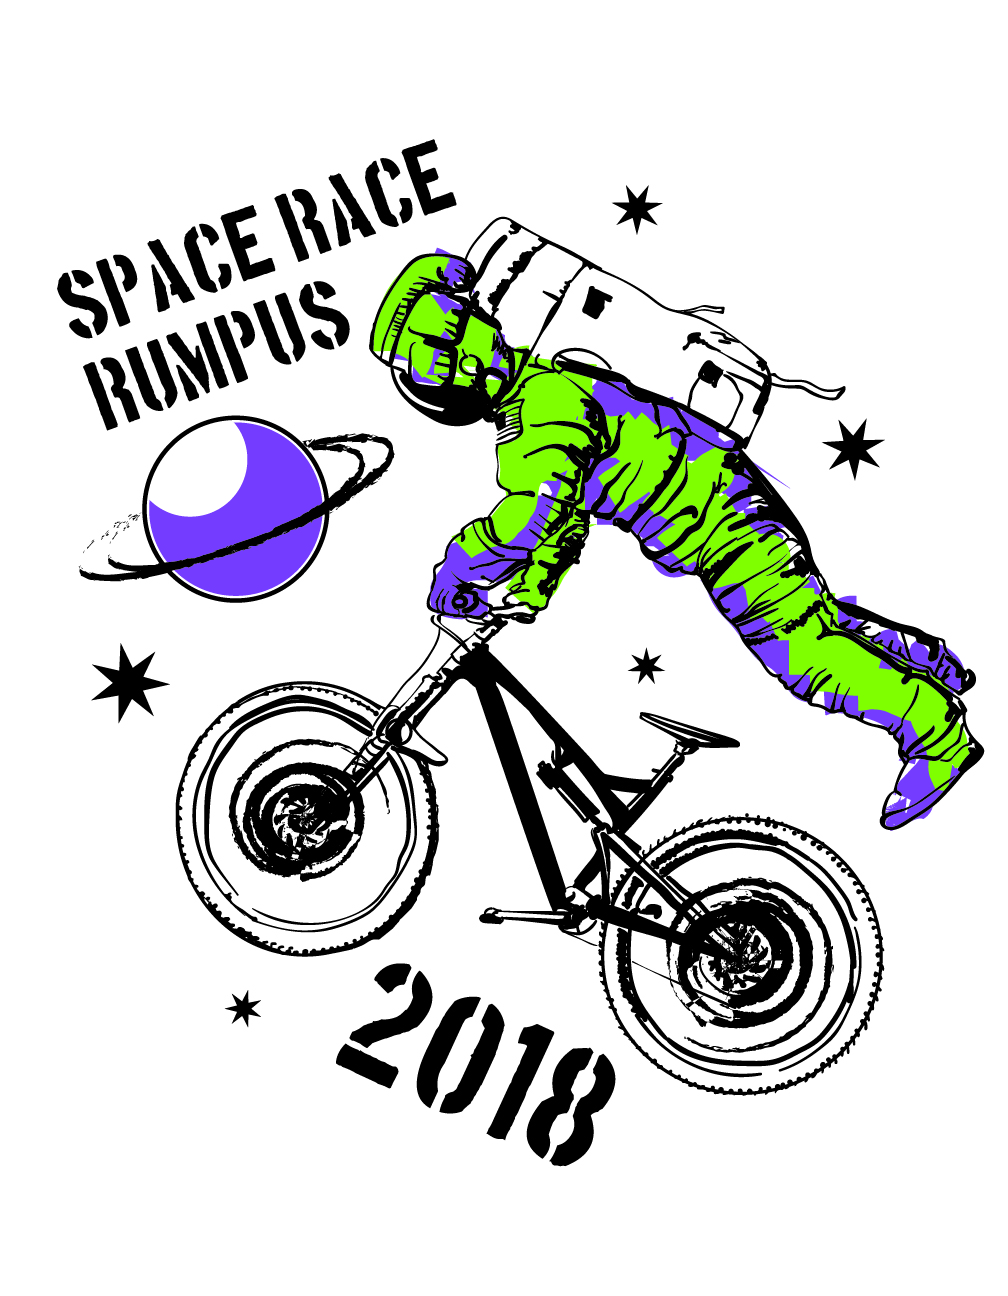 Space Race Rumpus T-shirt design